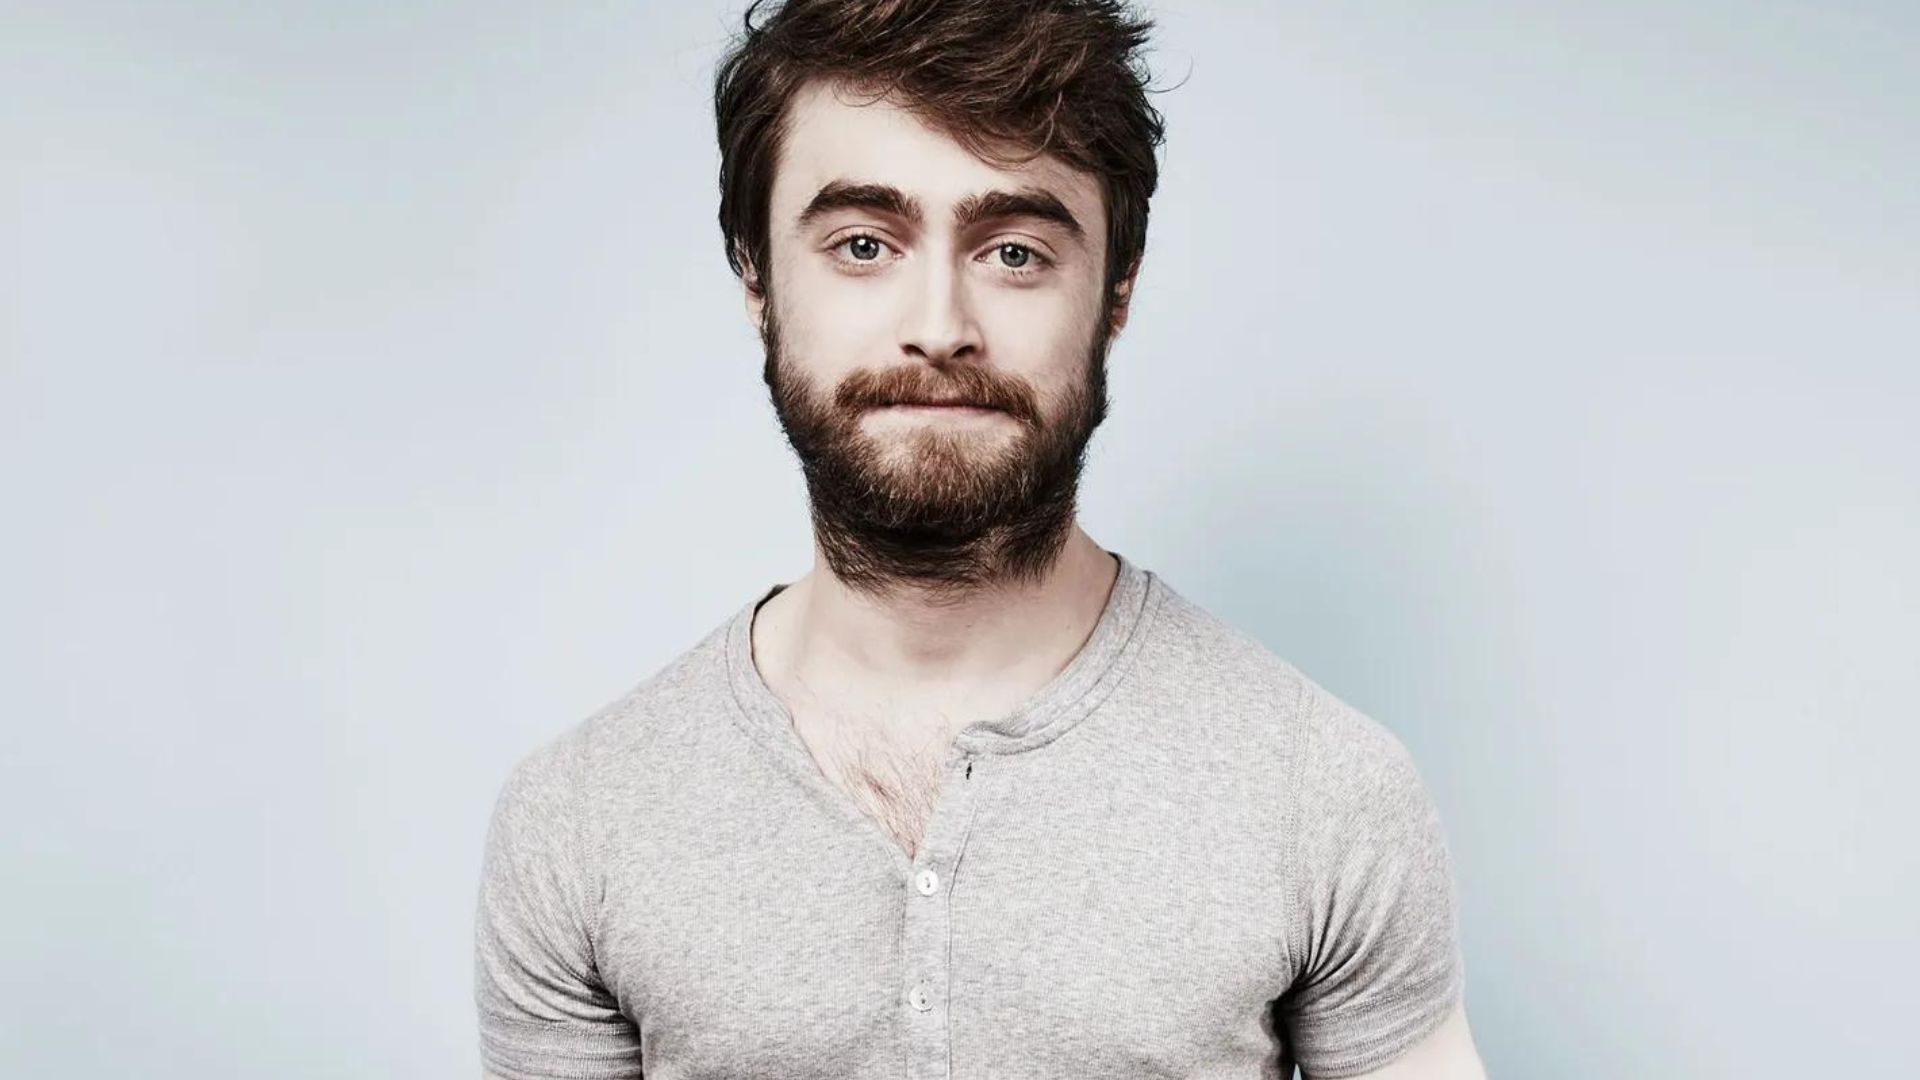 Daniel Radcliffe Wearing A Gray Shirt